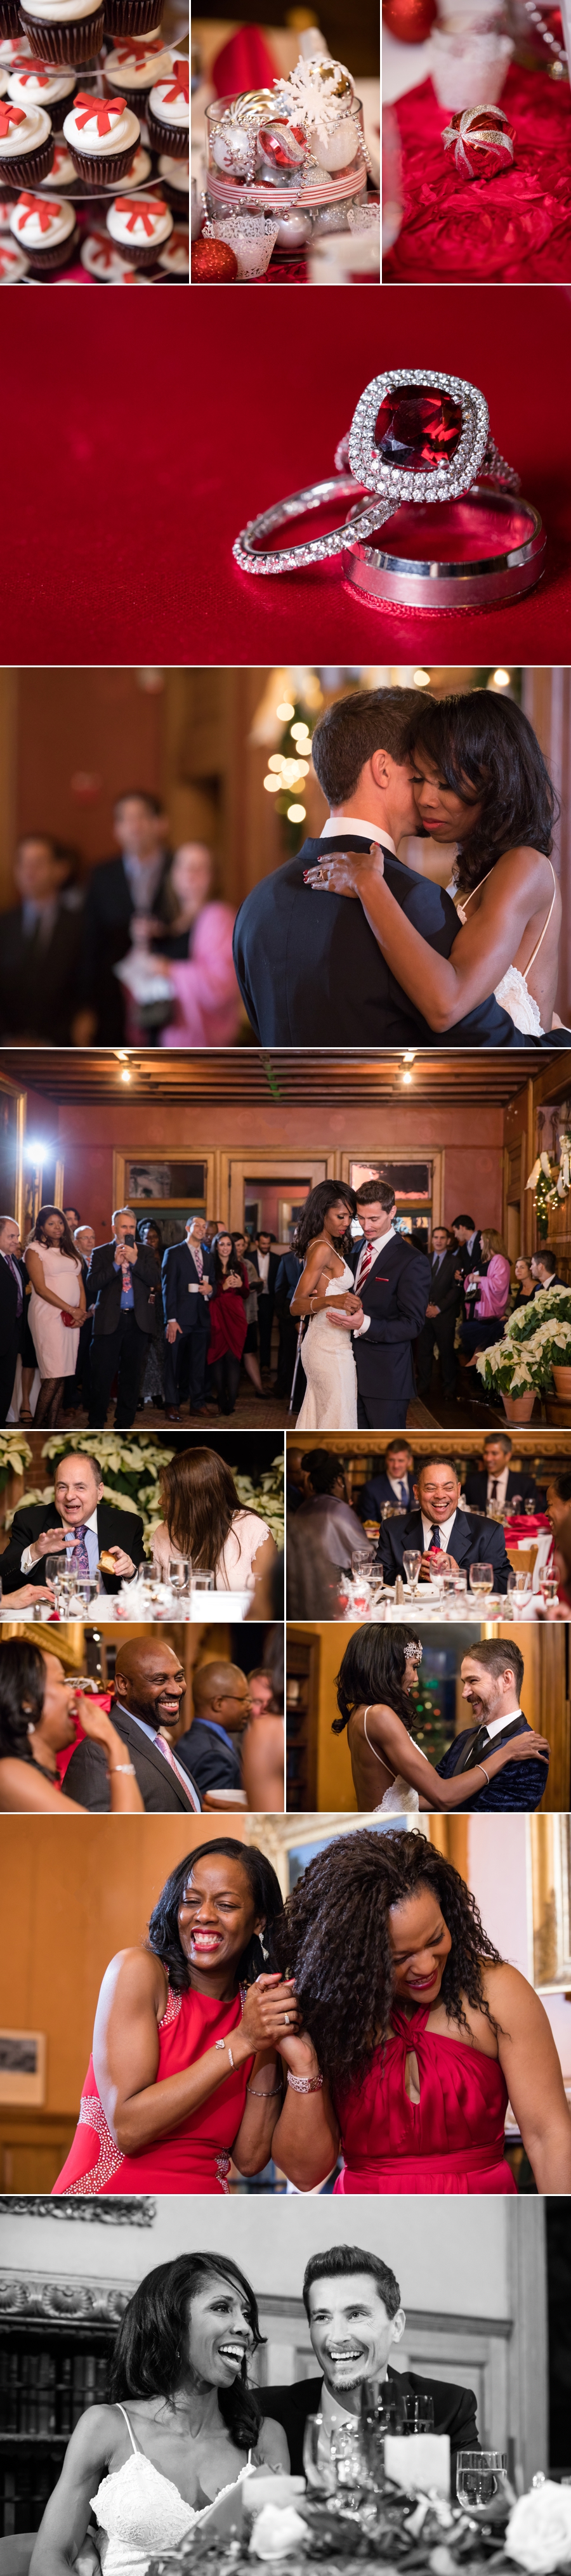 wedding reception collage 